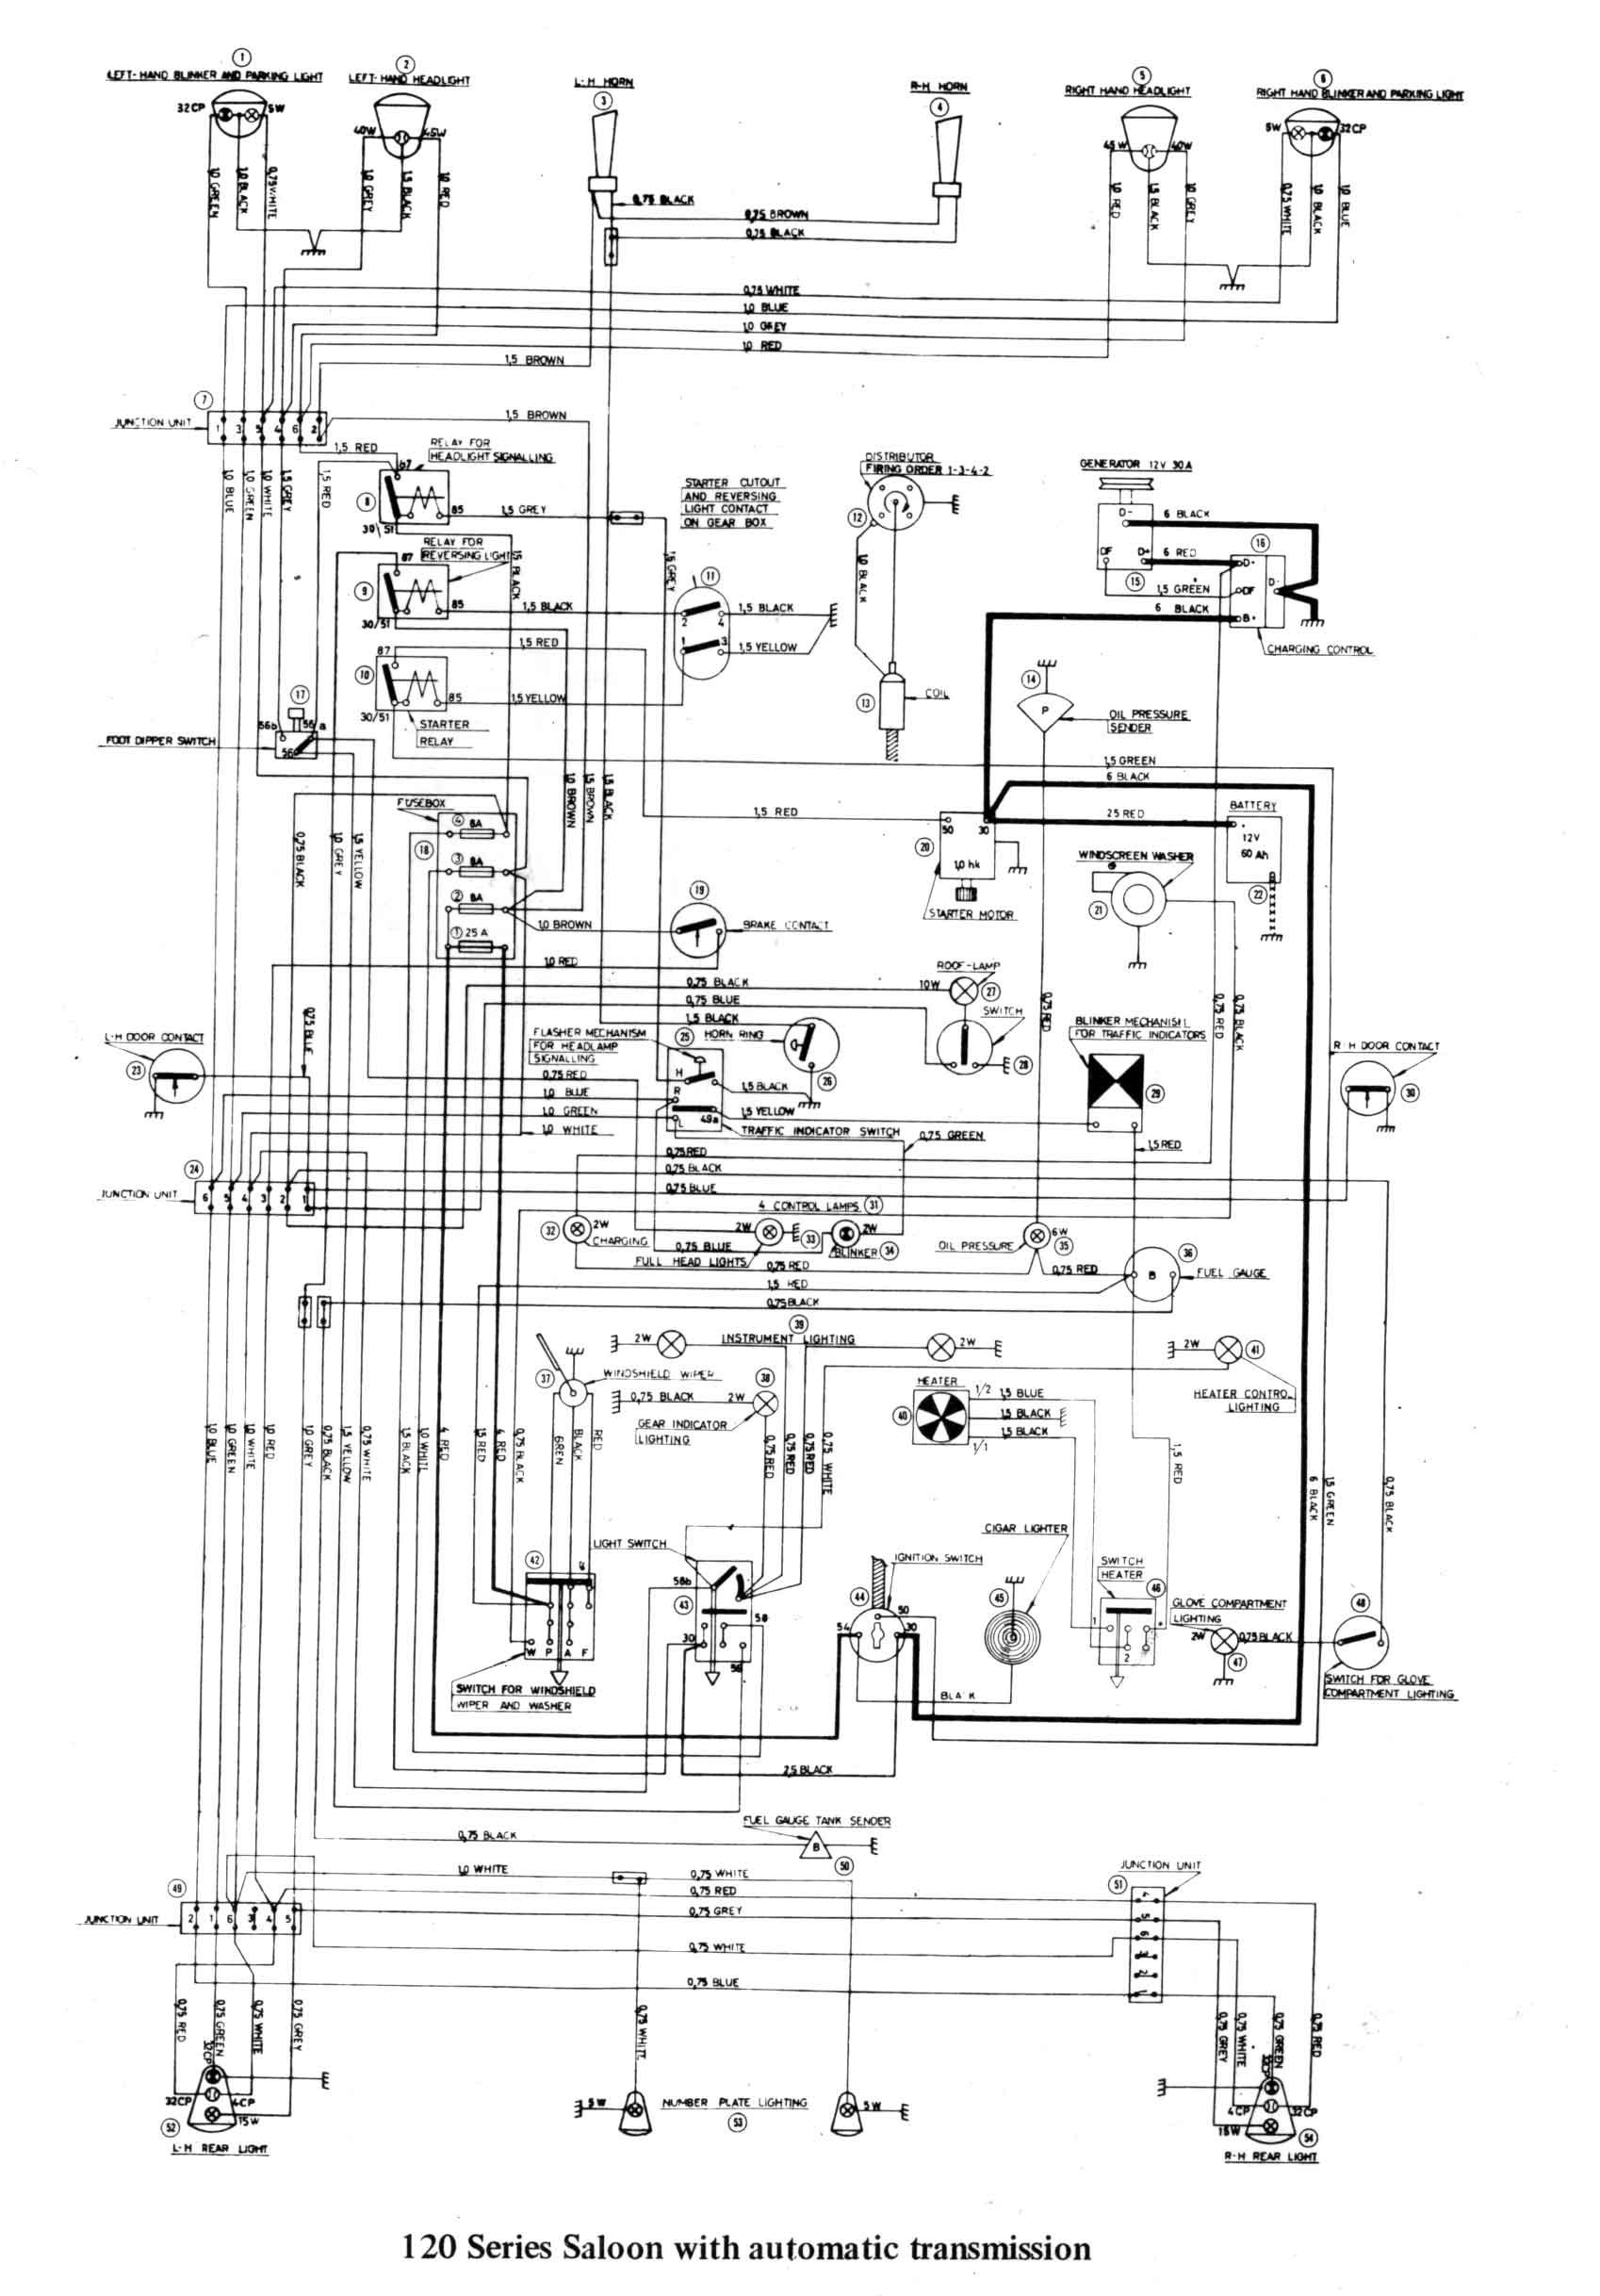 Straight Six Engine Diagram 2001 Volvo Truck Ac Wiring Diagram Wiring Diagram Of Straight Six Engine Diagram